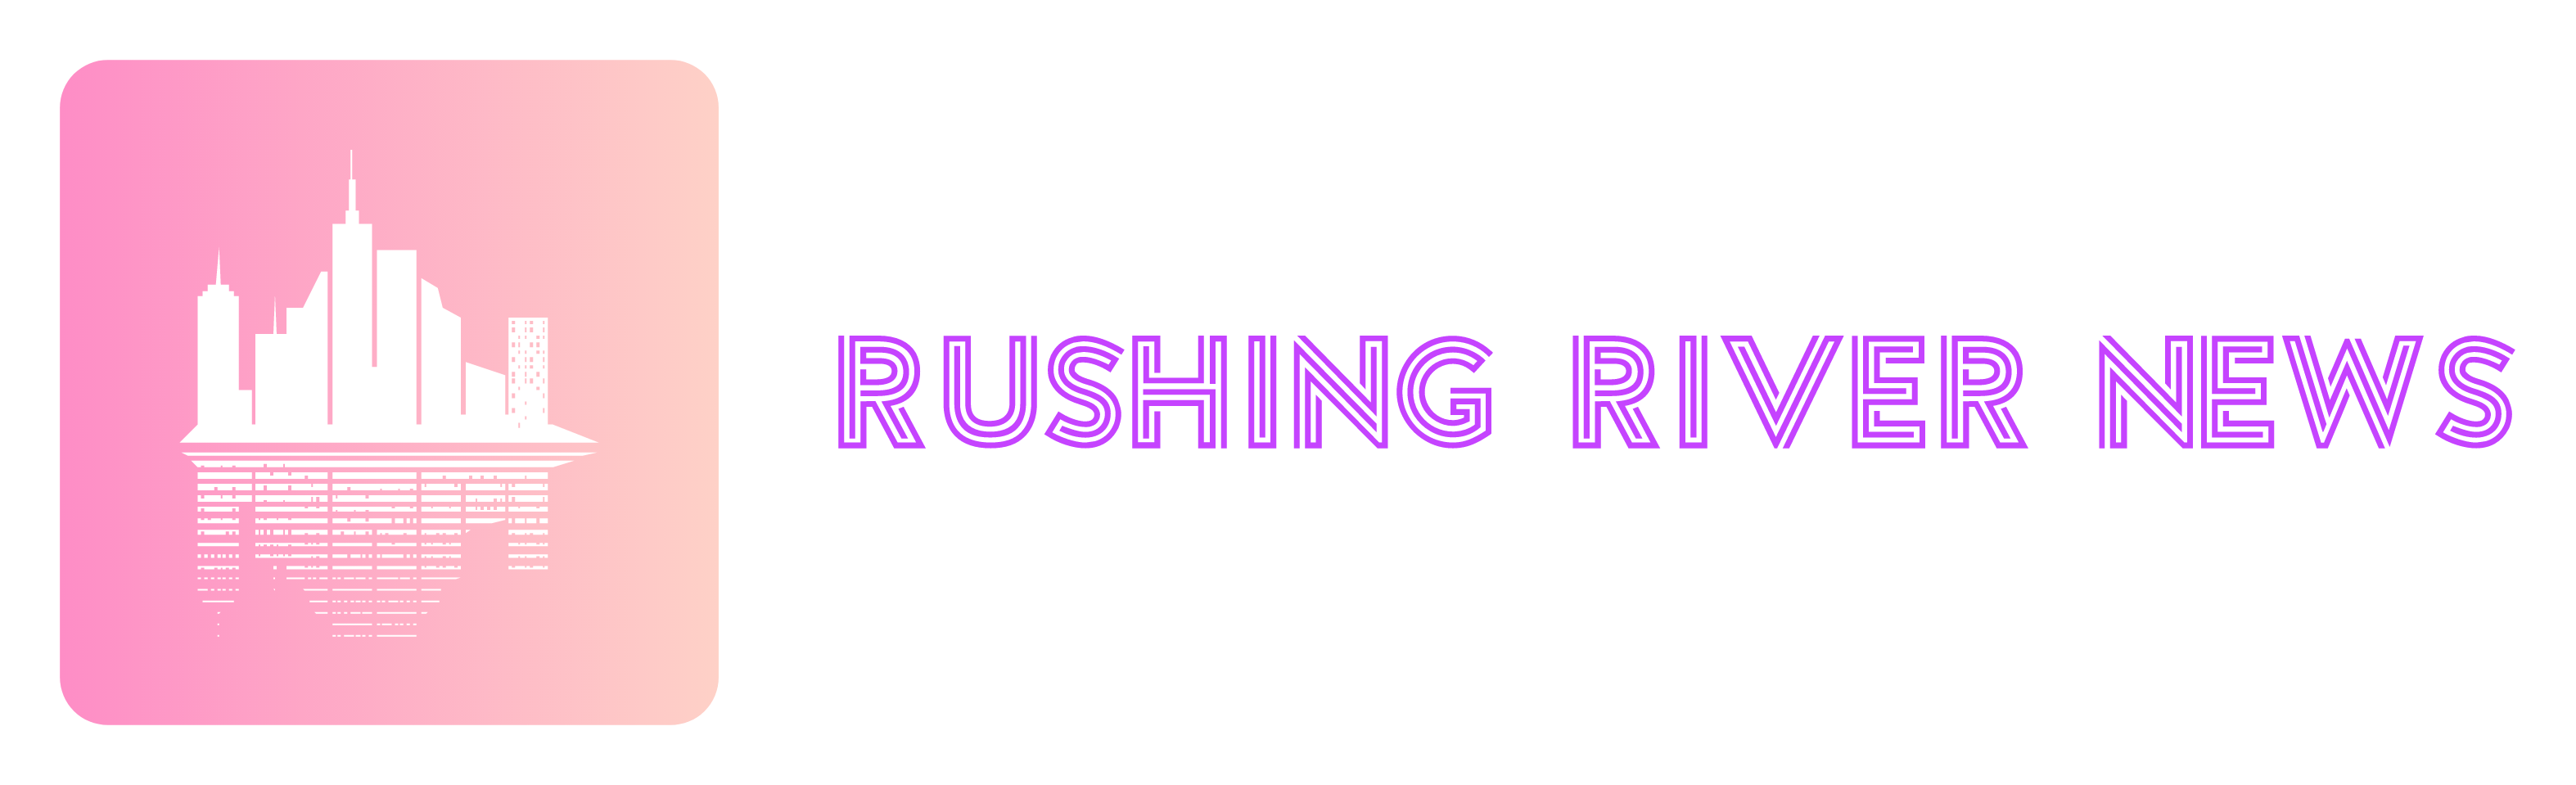 rushingrivernews.com